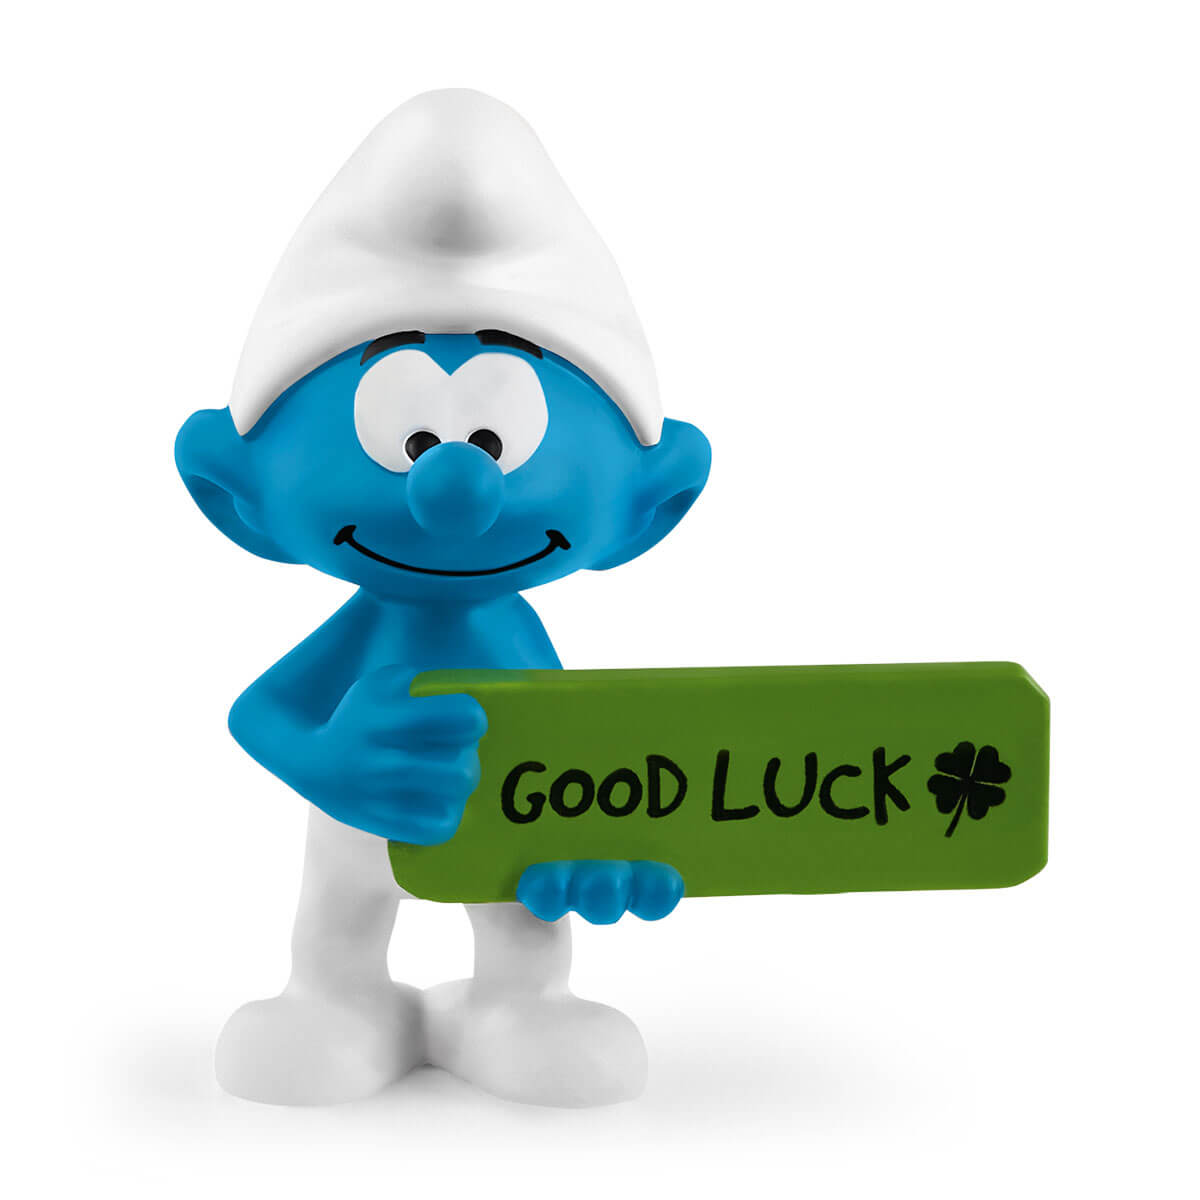 Good luck Smurf